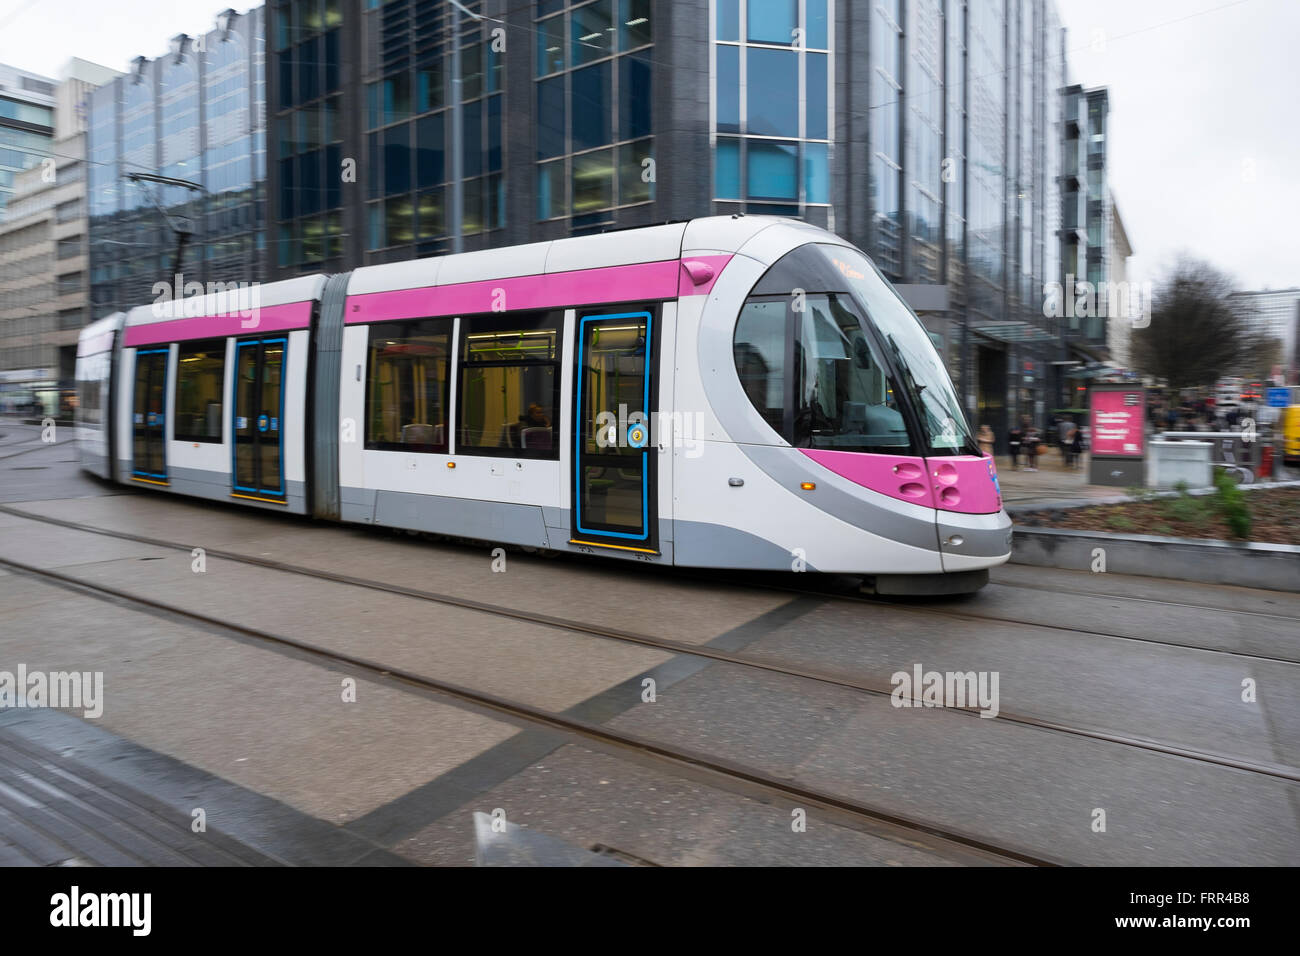 A Midland Metro tram in Birmingham city centre, West Midlands, England, UK Stock Photo